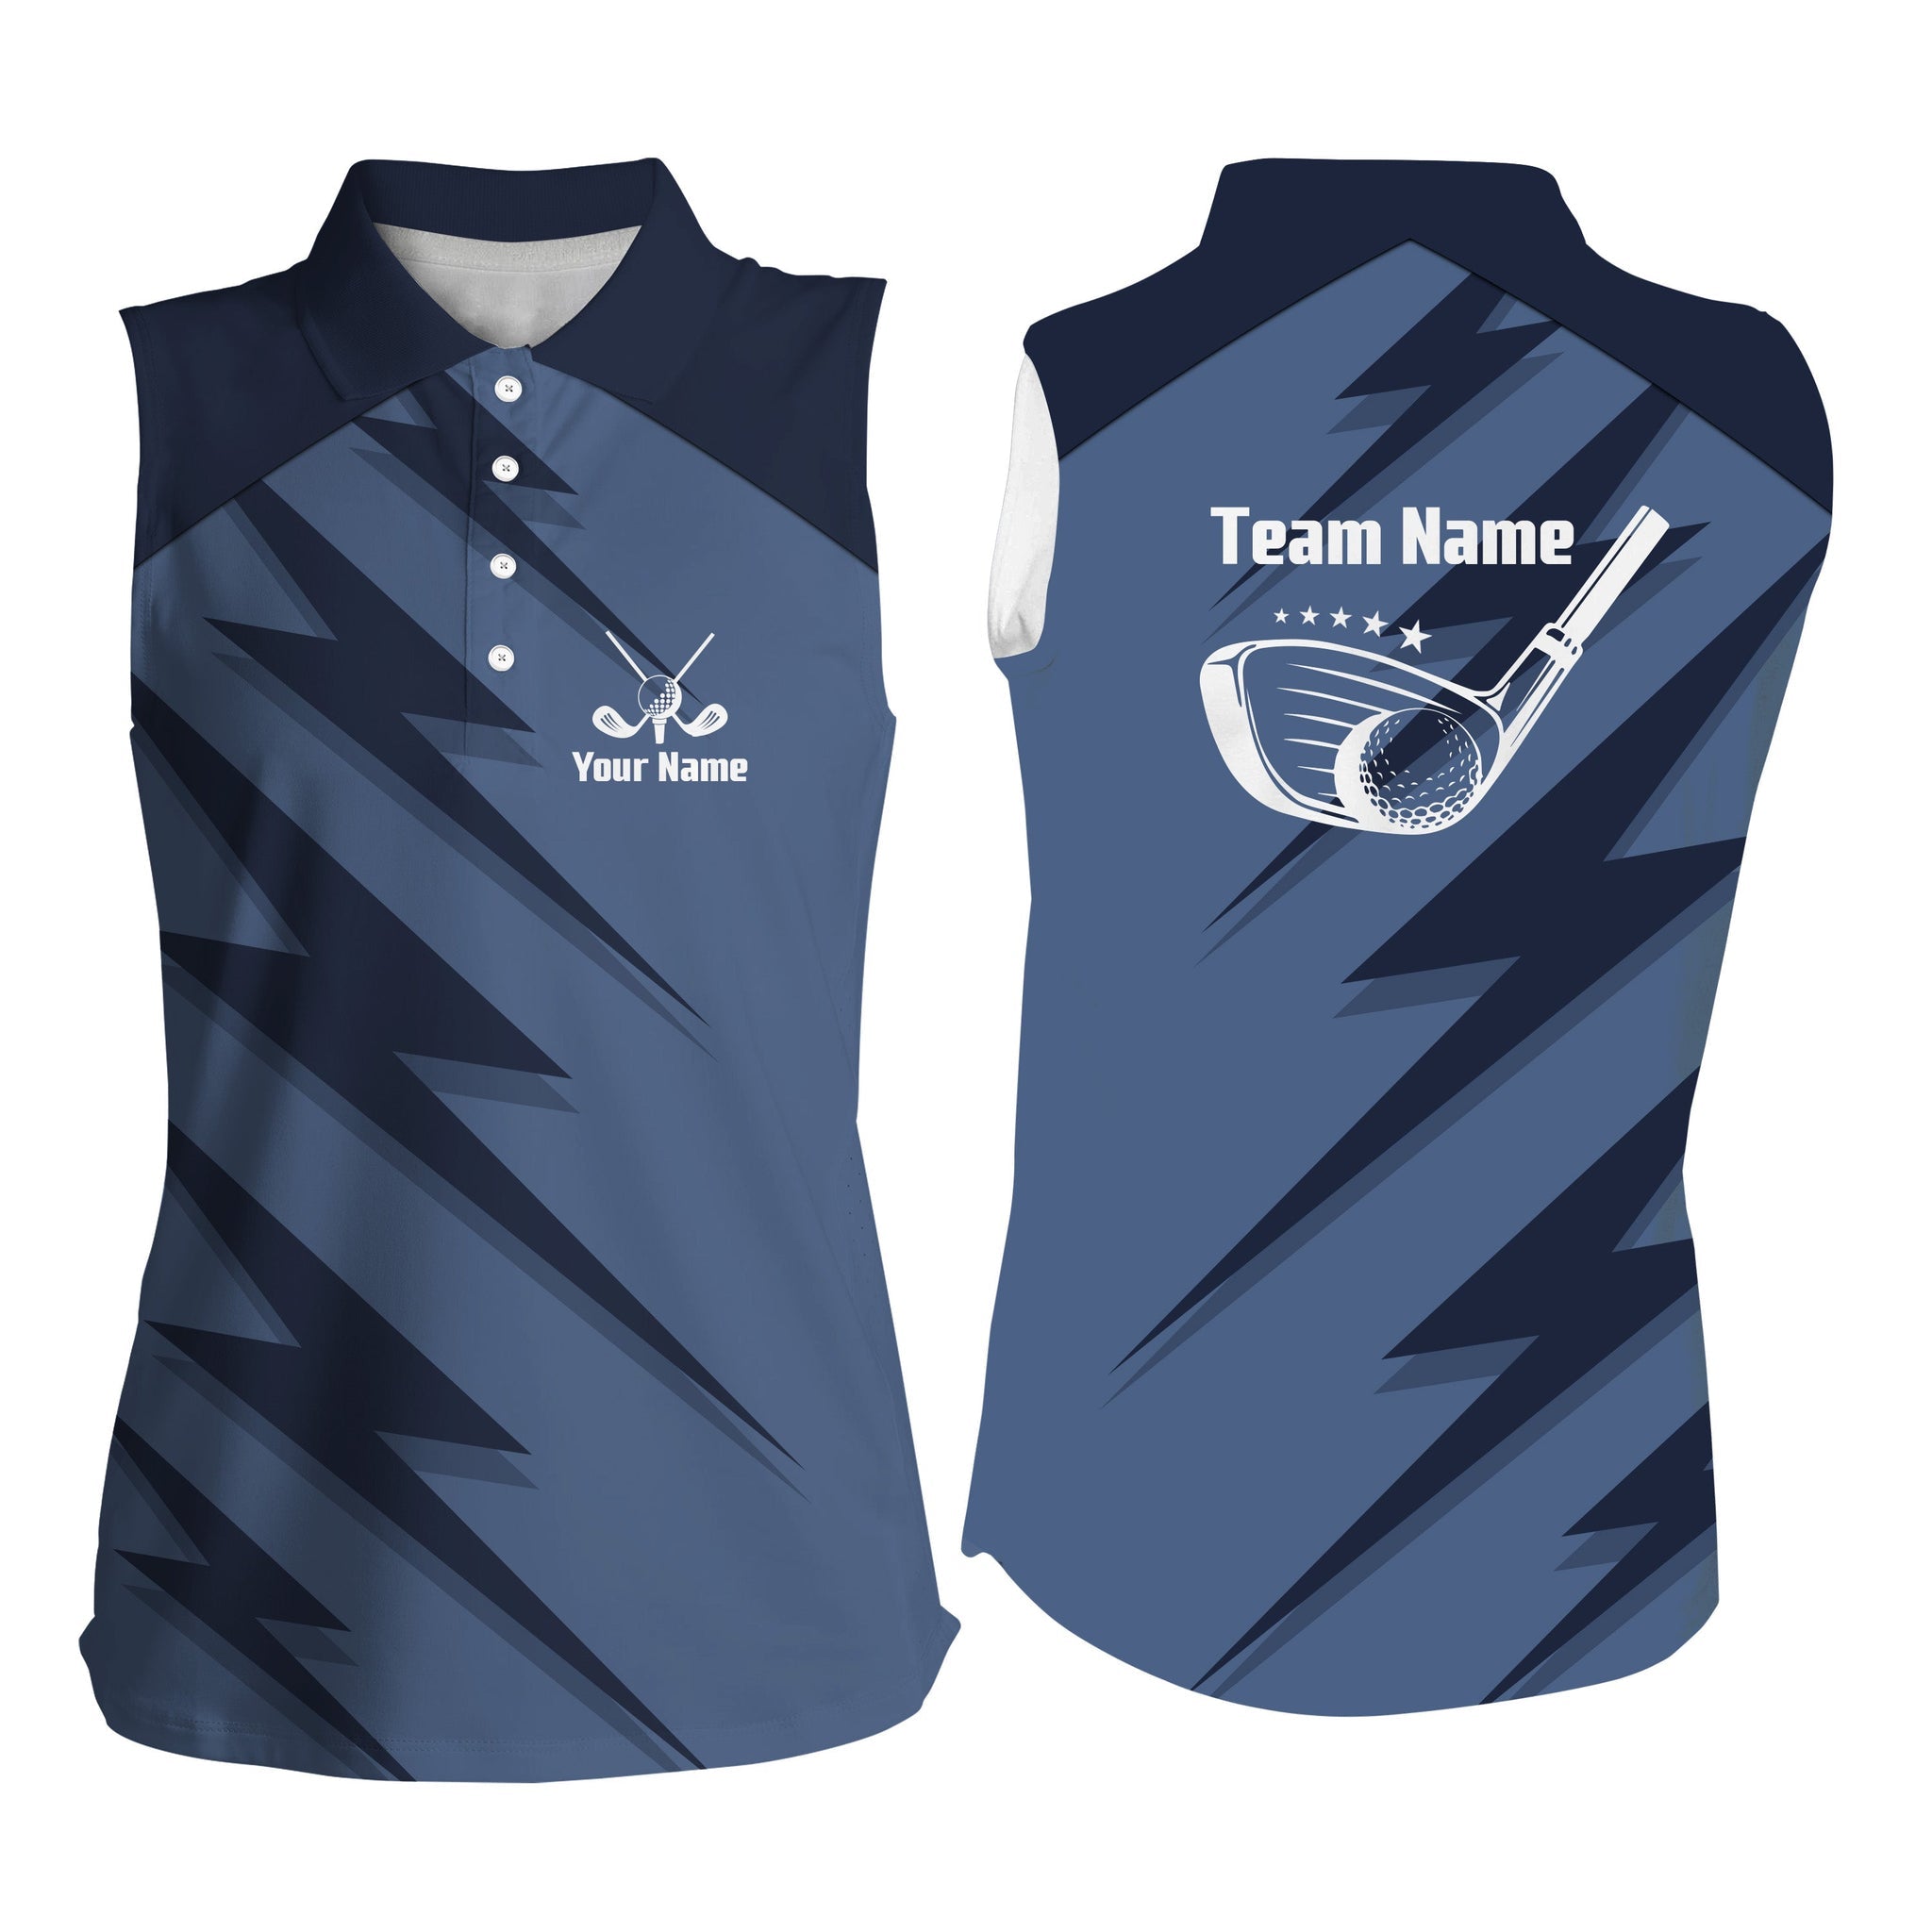 Custom Name And Team Name Golf Shirt/ Women Sleeveless Polo Shirts Blue Lightning Shirt/ Golfing Gifts/ Uniform Team Golf